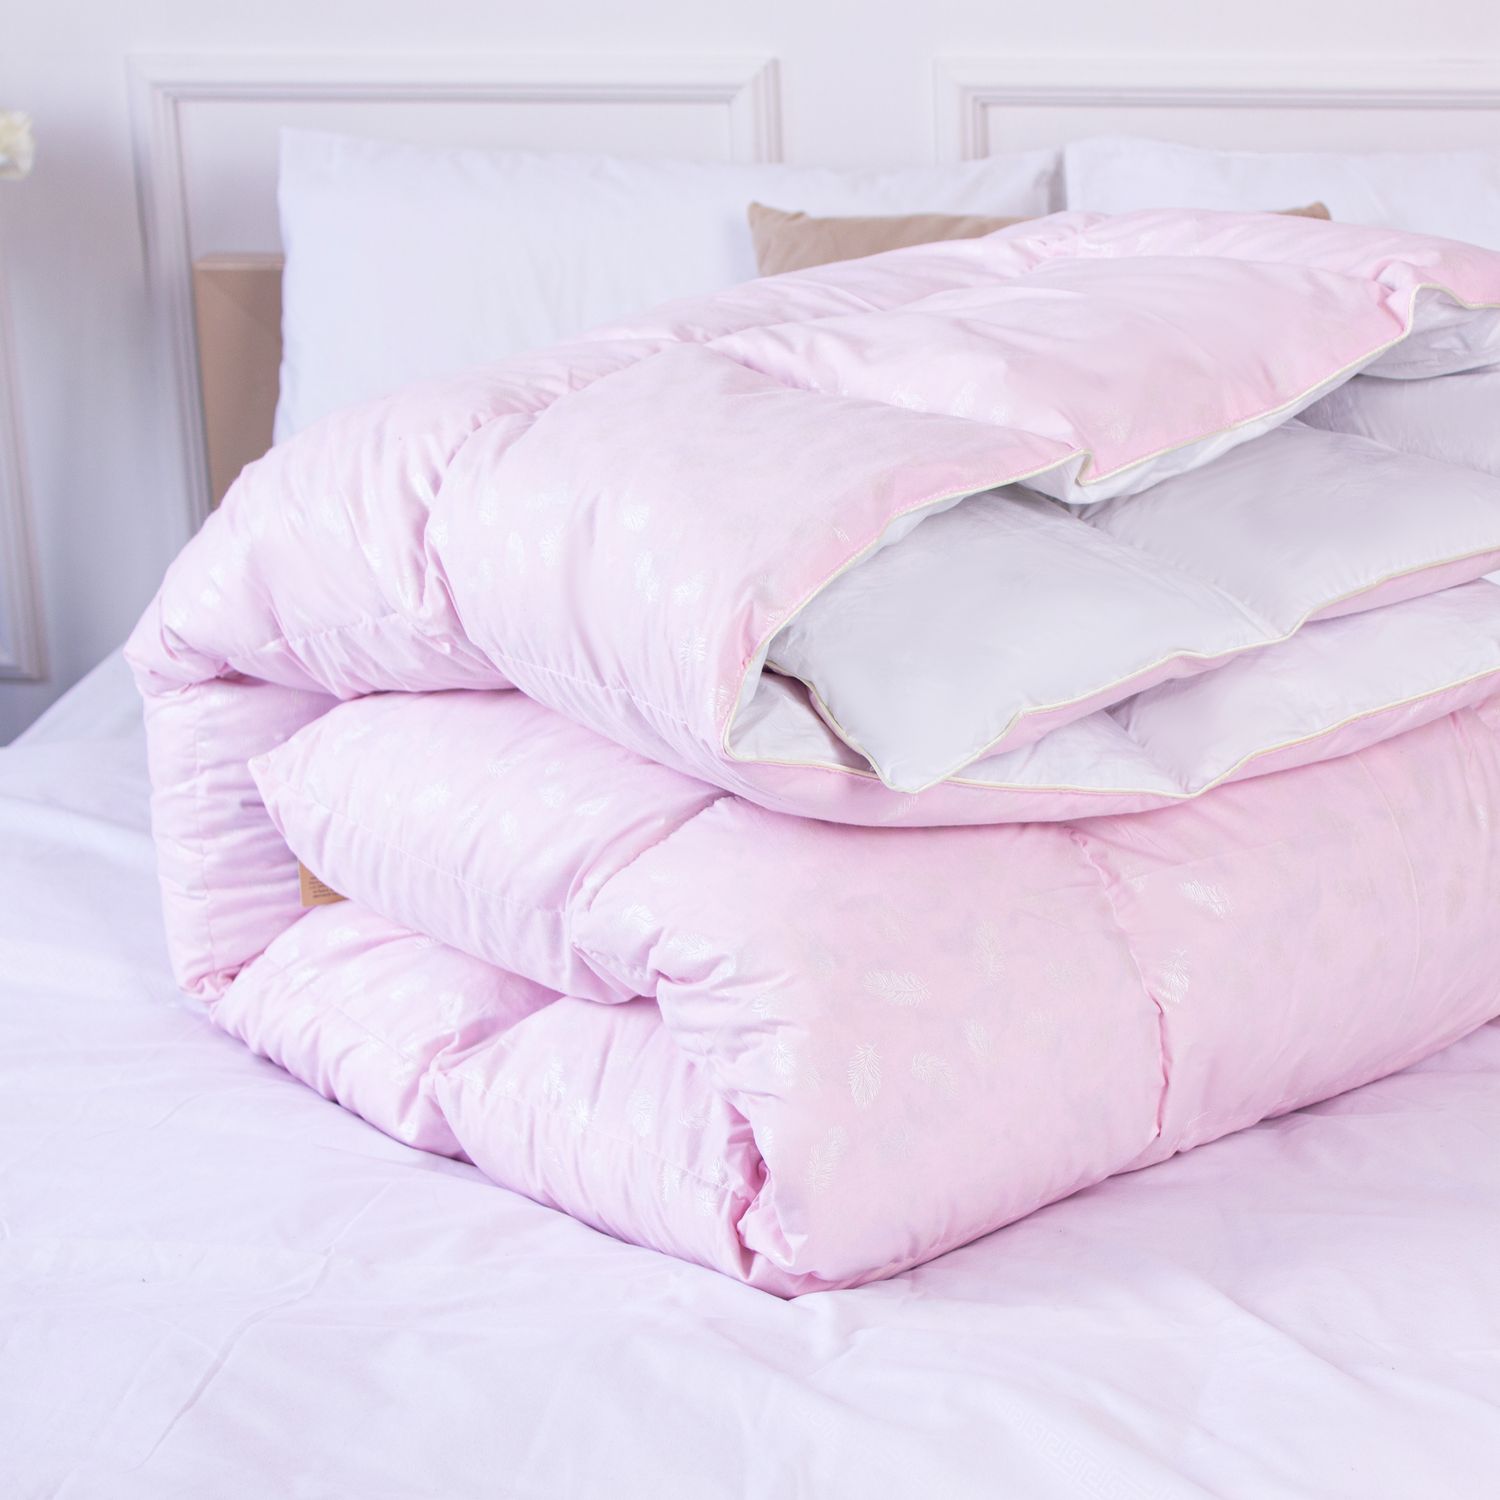 Одеяло пуховое MirSon Karmen №1829 Bio-Pink, 90% пух, двуспальное, 205x172, розовое (2200003012958) - фото 3